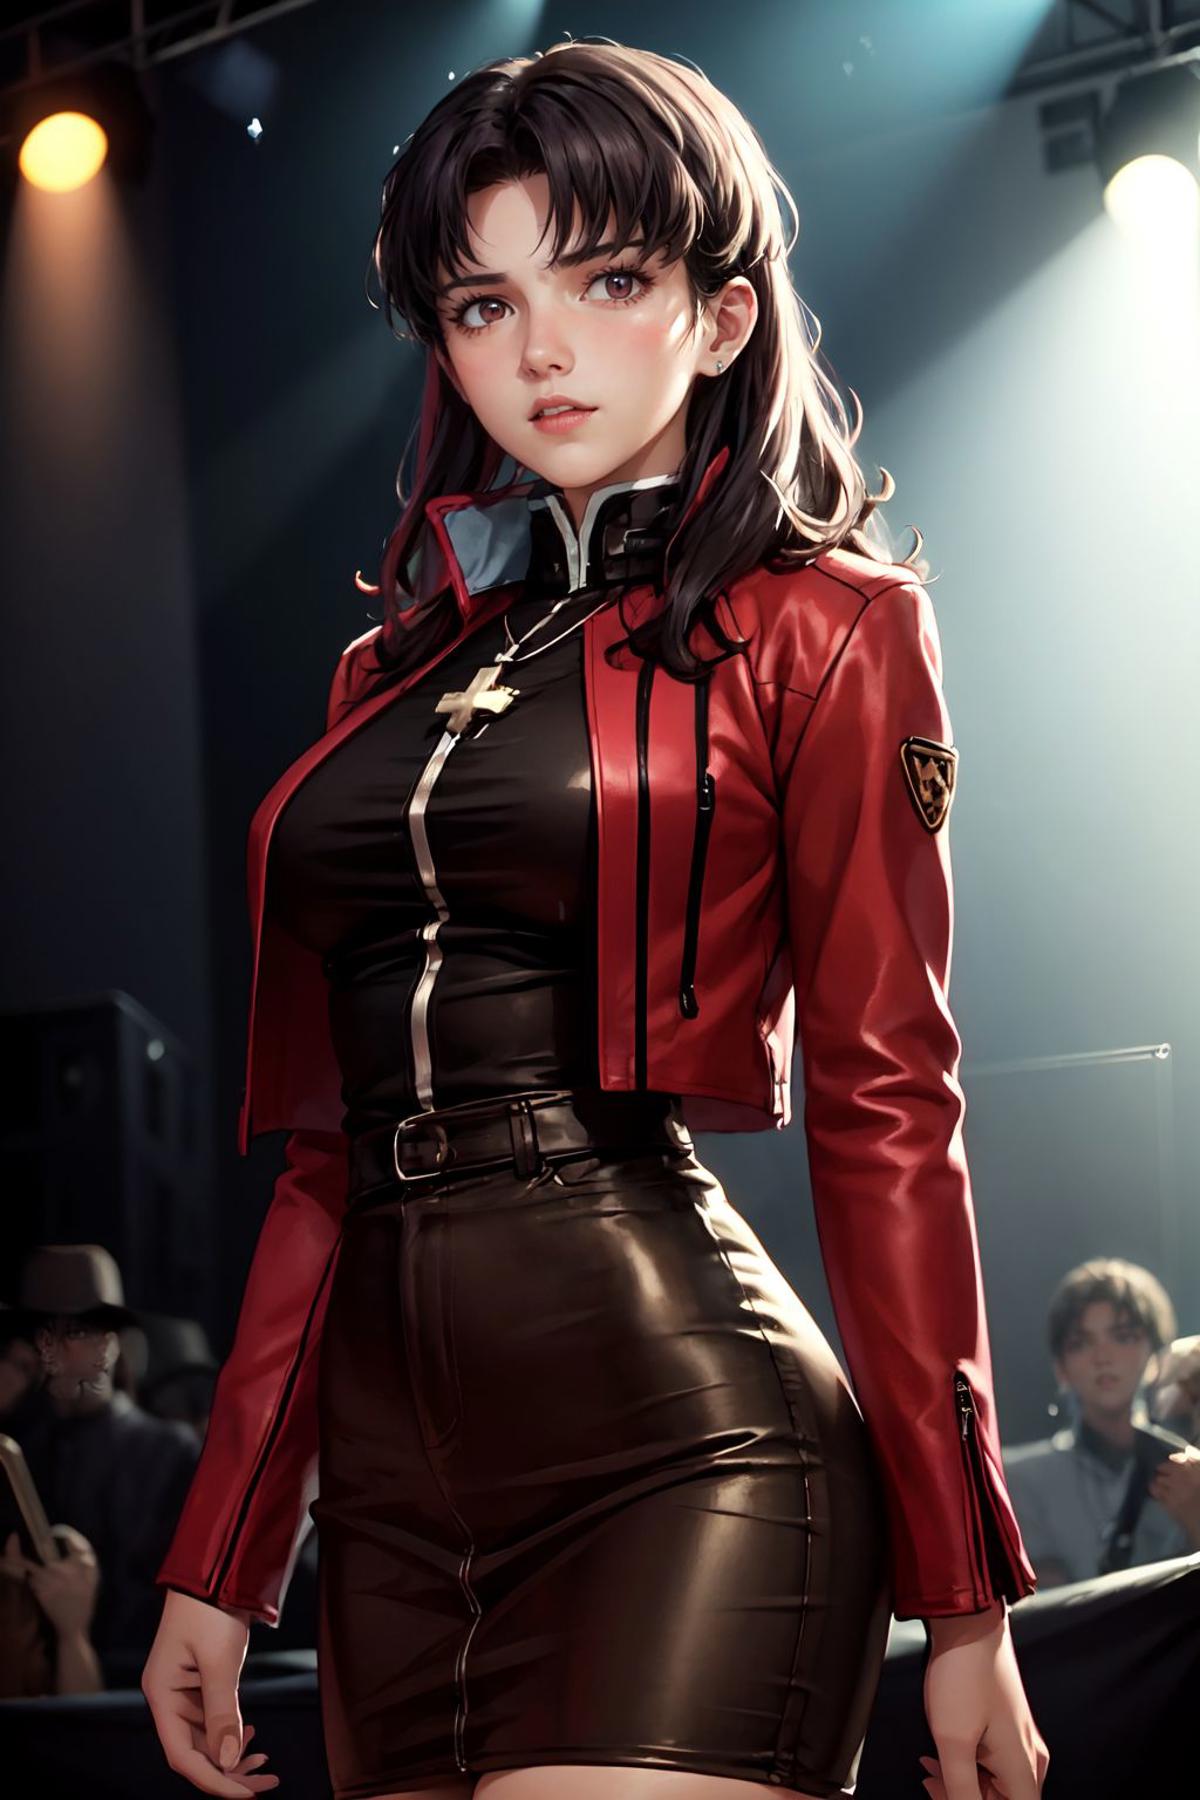 Misato Katsuragi - Red Jacket │Neon Genesis Evangelion image by Seljak